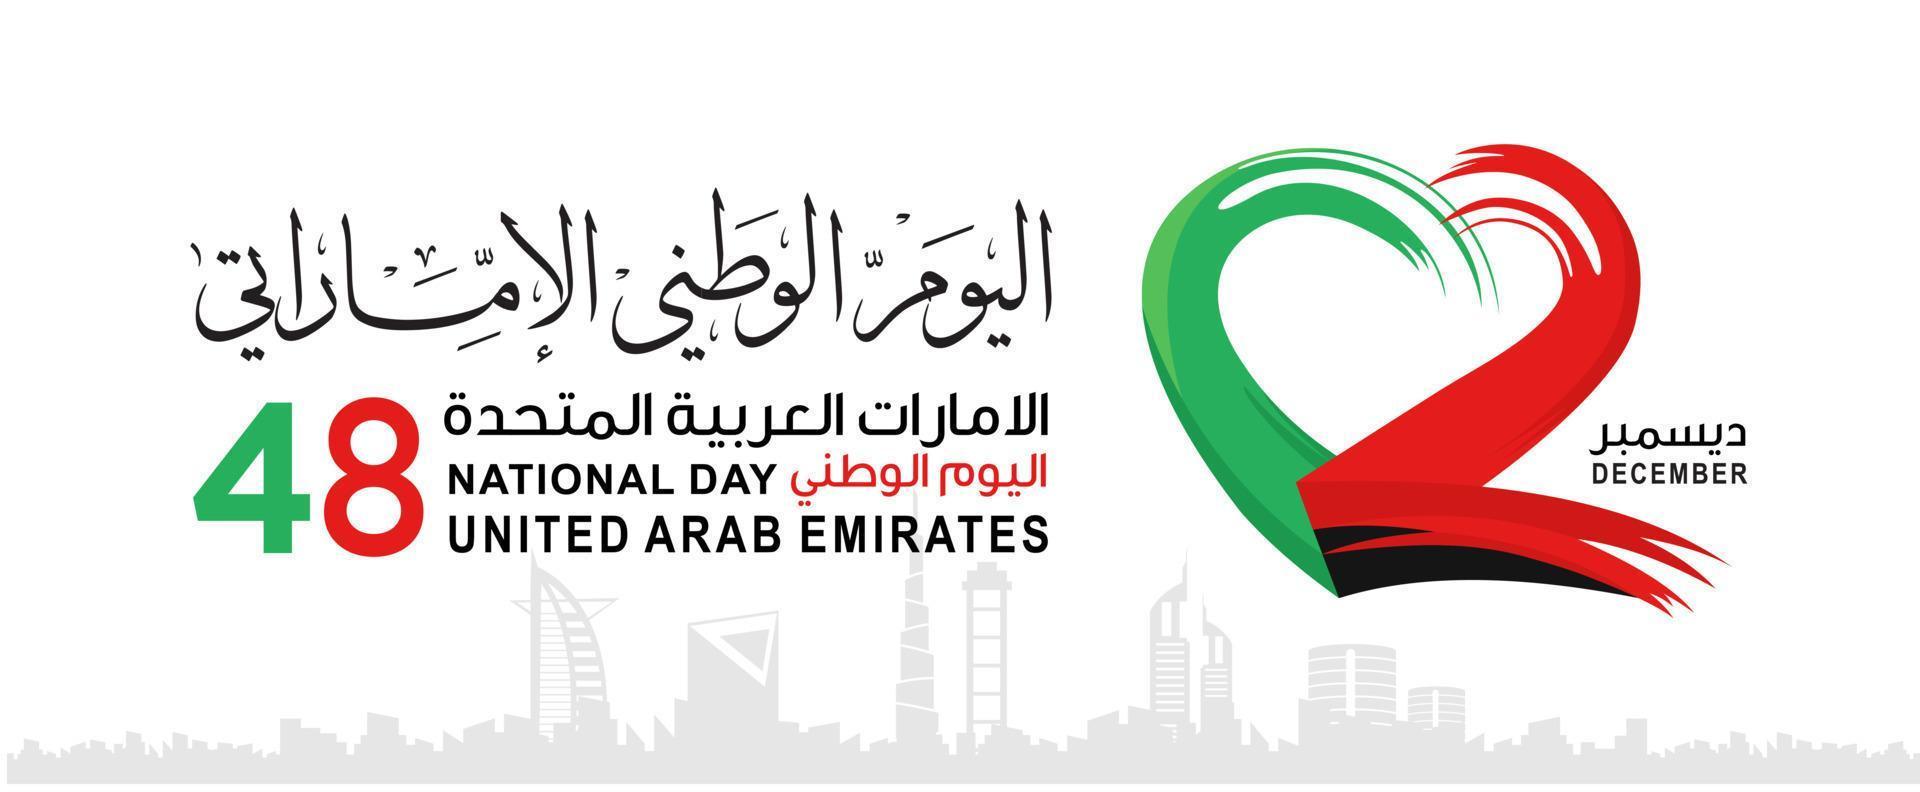 United Arab emirates UAE national day, spirit of the union, 48th national day of the United Arab Emirates, martyr's day memory in November 30 in United Arab Emirates vector